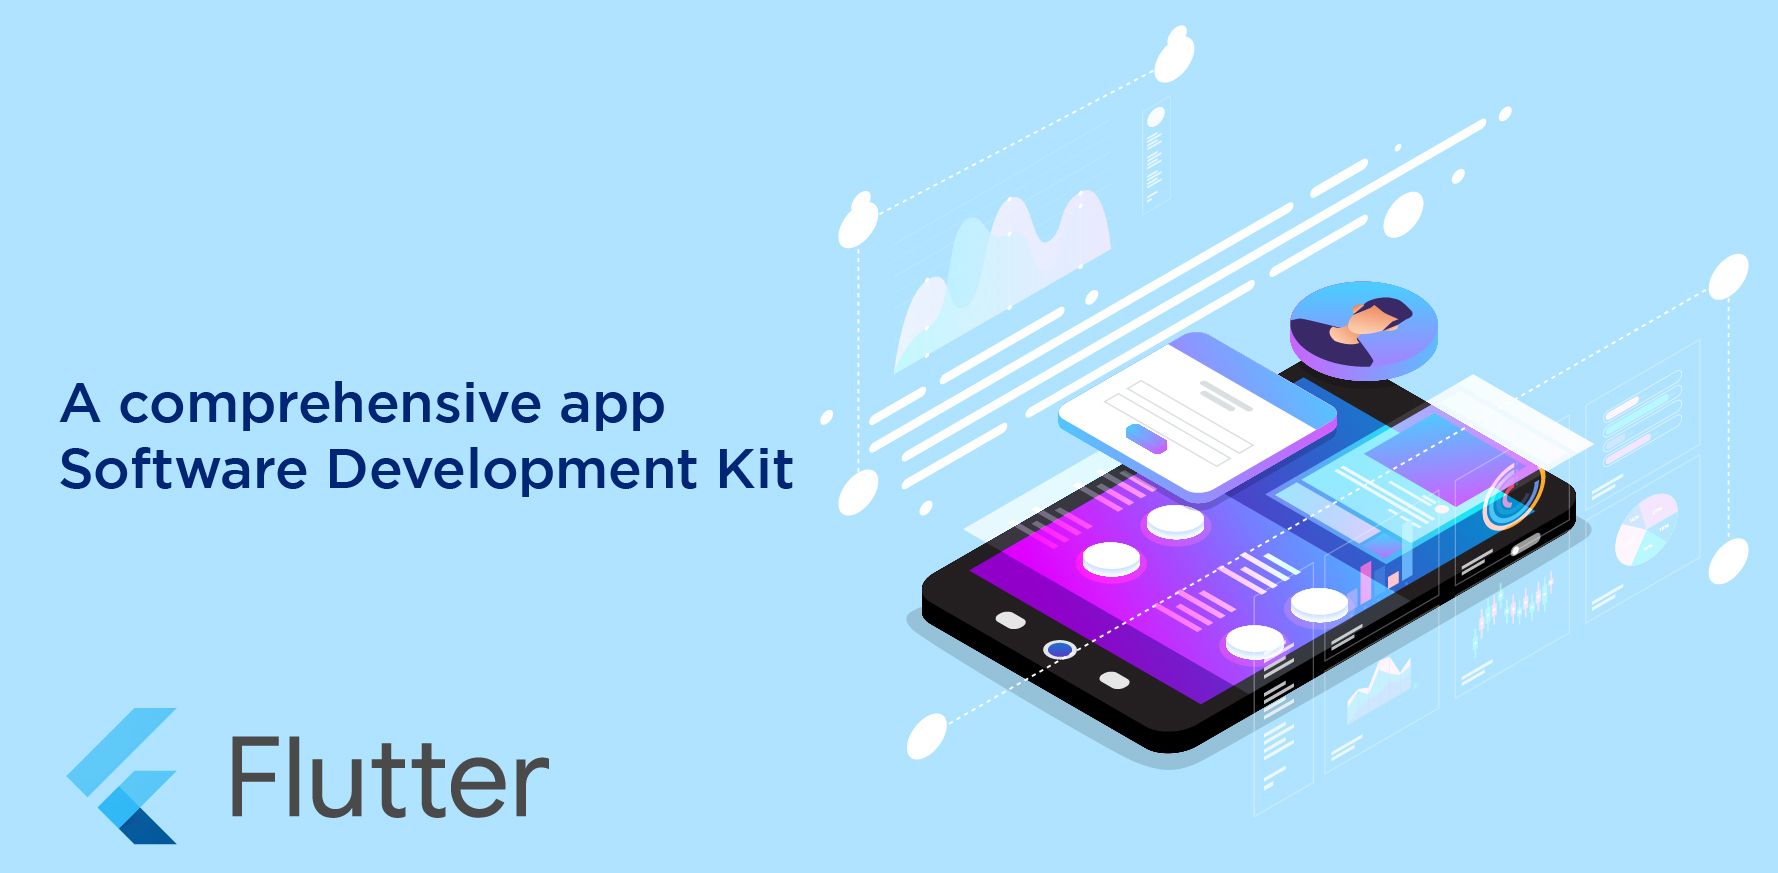 Flutter: A comprehensive app Software Development Kit 